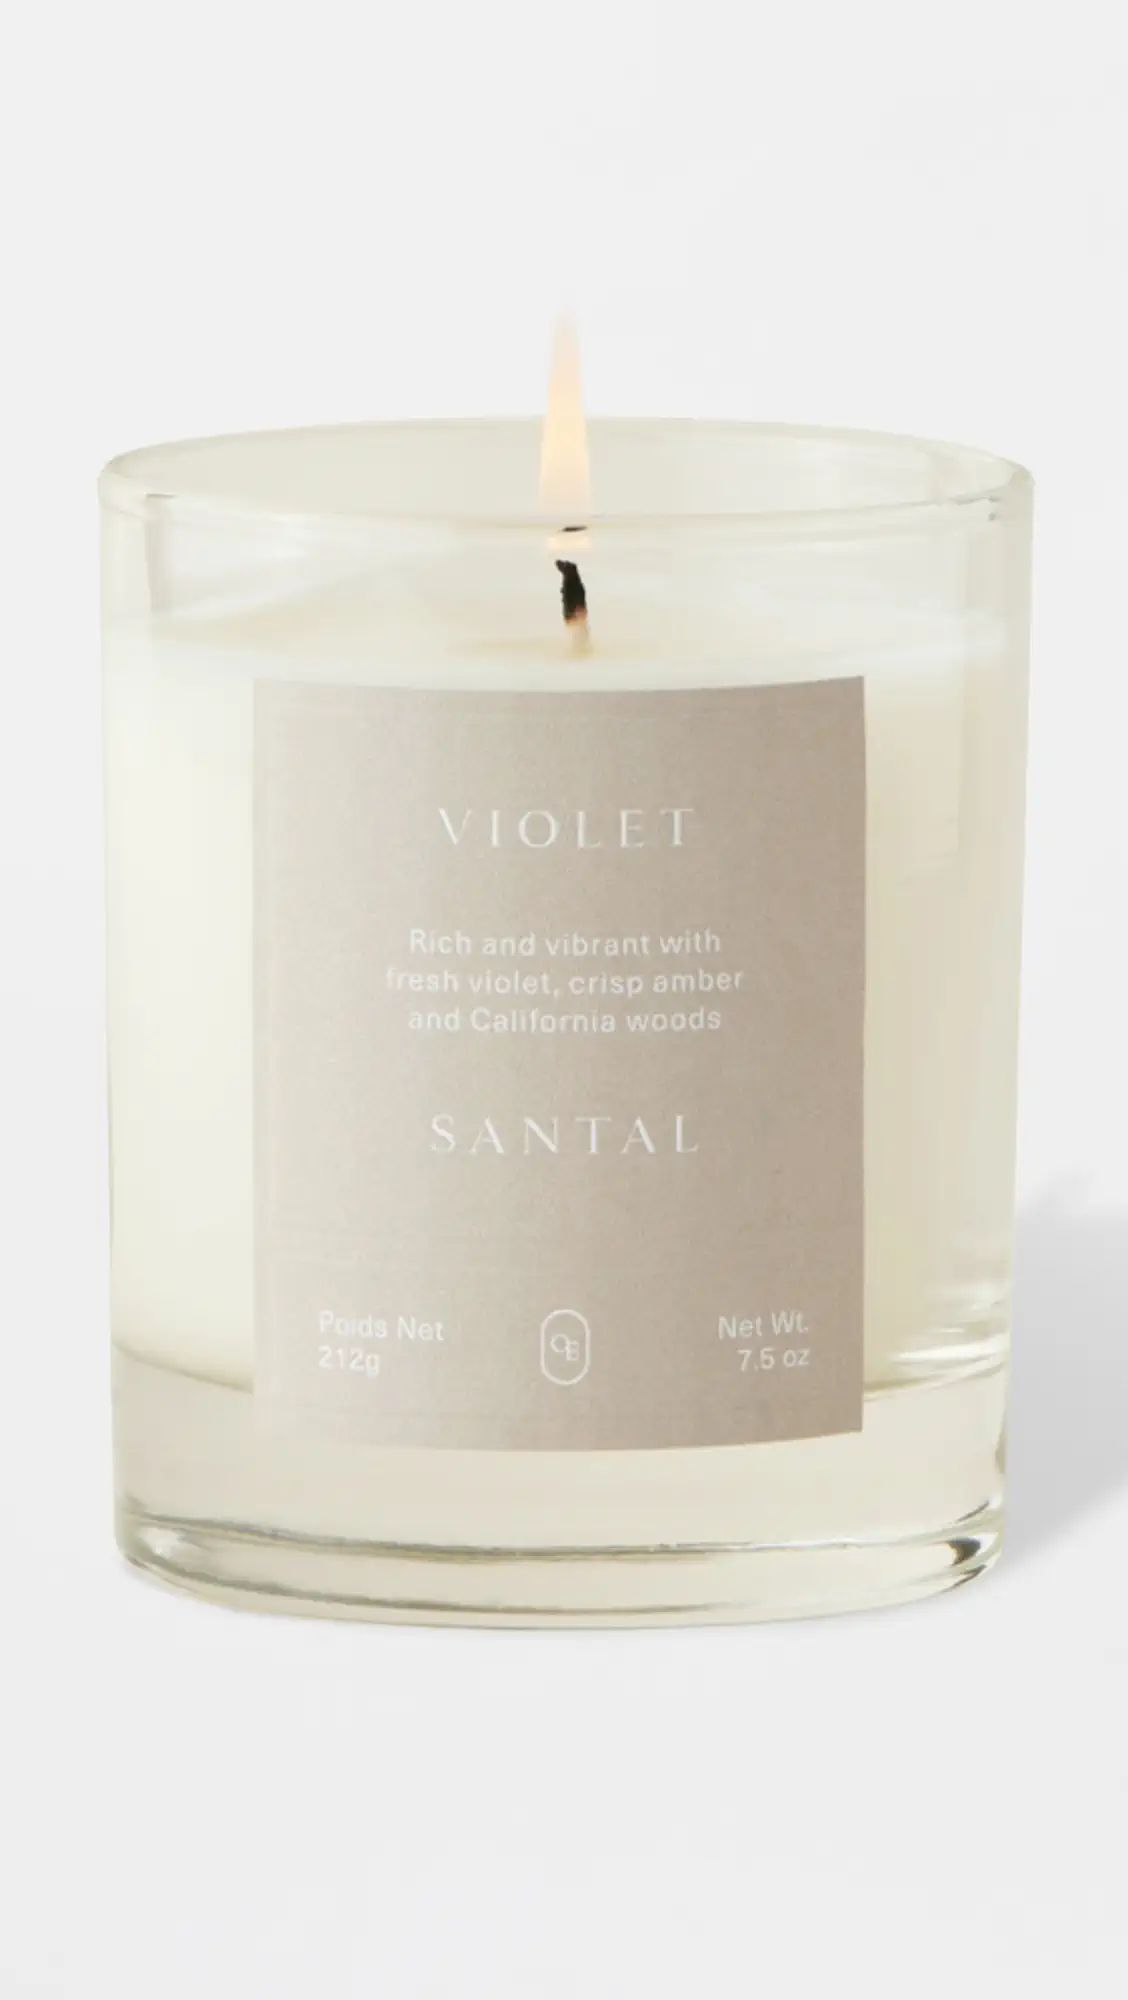 Oak Essentials Violet Santal Candle | Shopbop | Shopbop